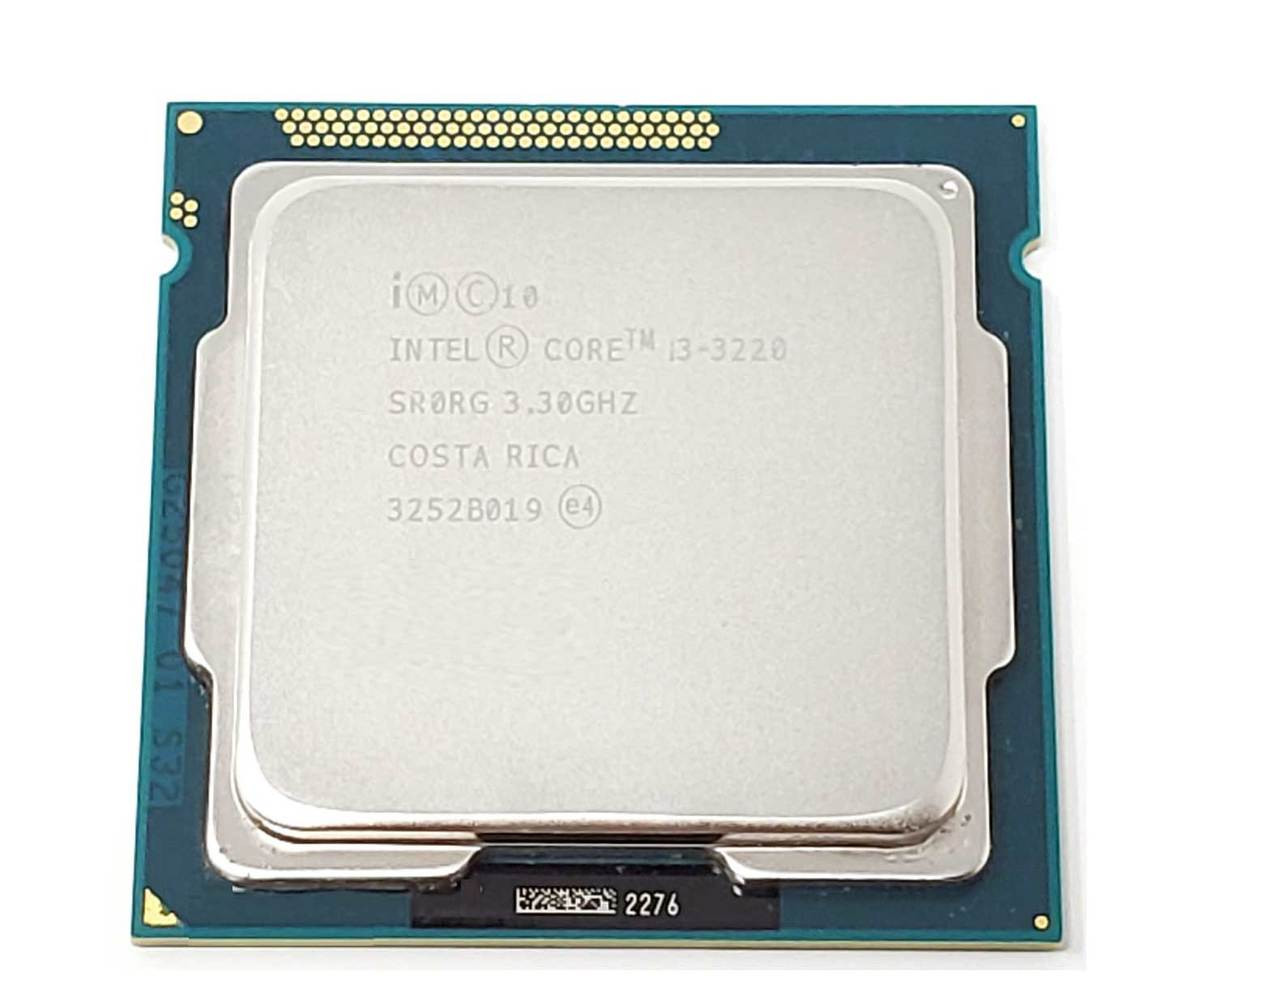 Intel Core i3 N305 @ 2693.41 MHz - CPU-Z VALIDATOR